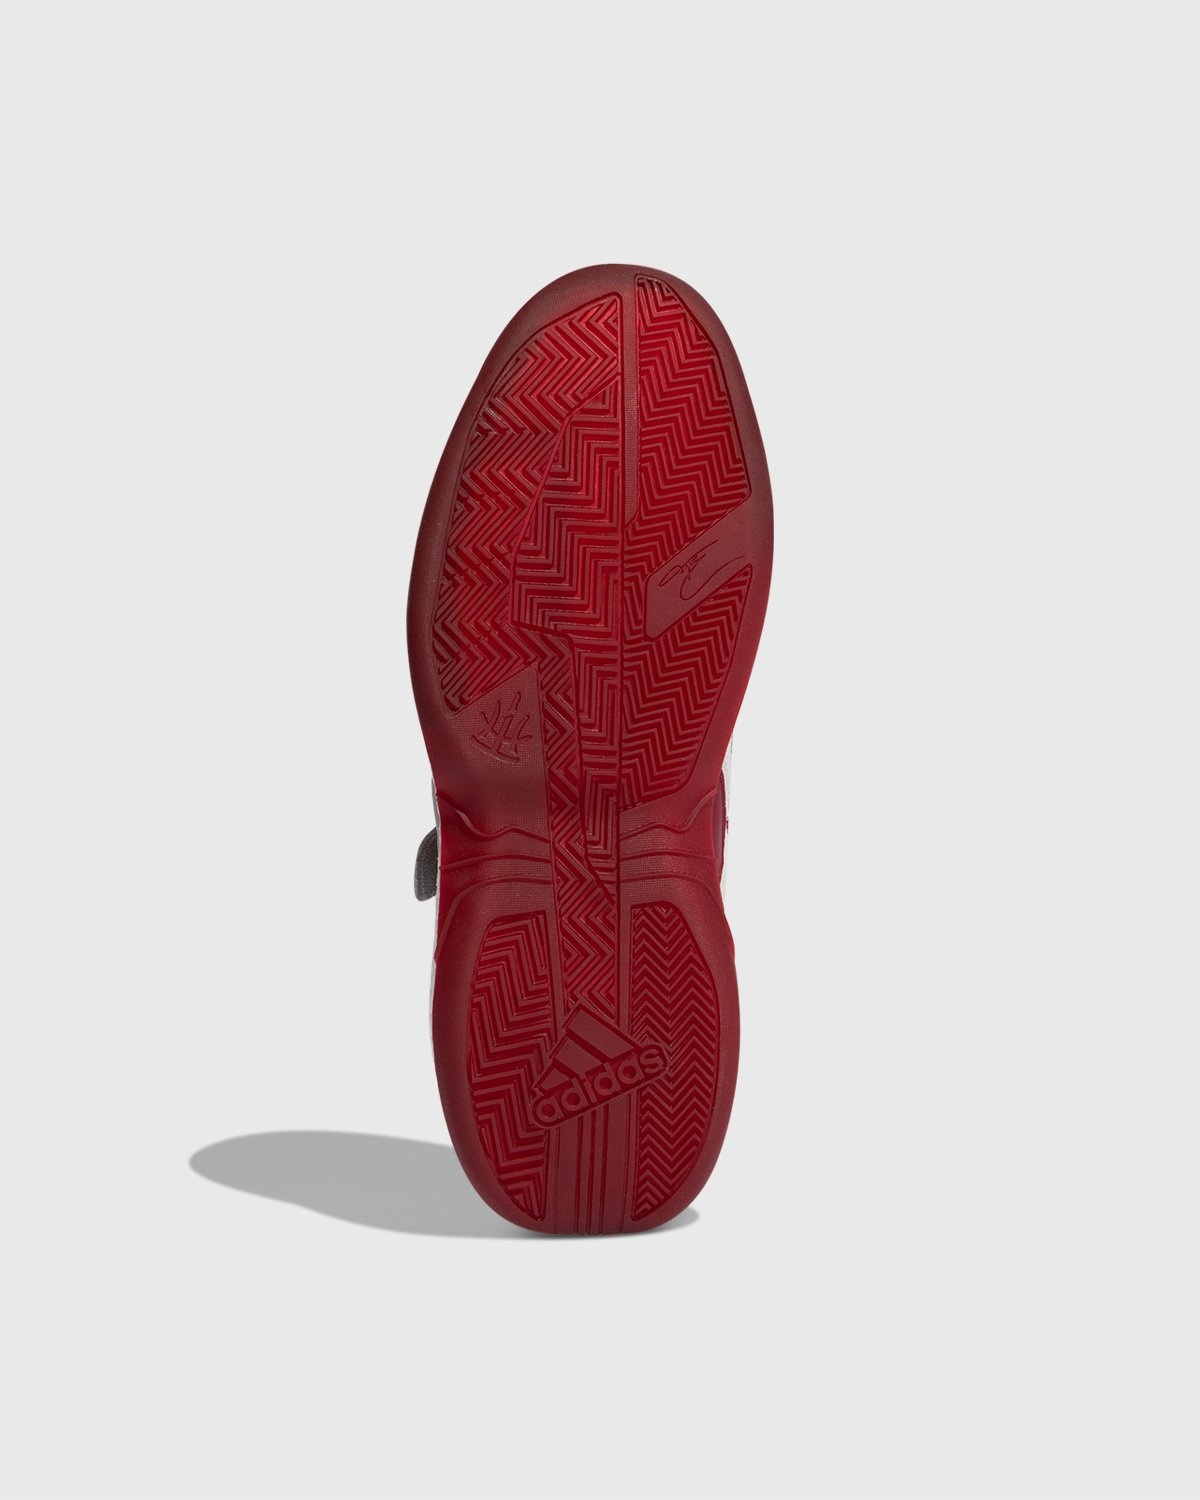 adidas Originals x Human Made – Forum Low Burgundy - Low Top Sneakers - Grey - Image 7